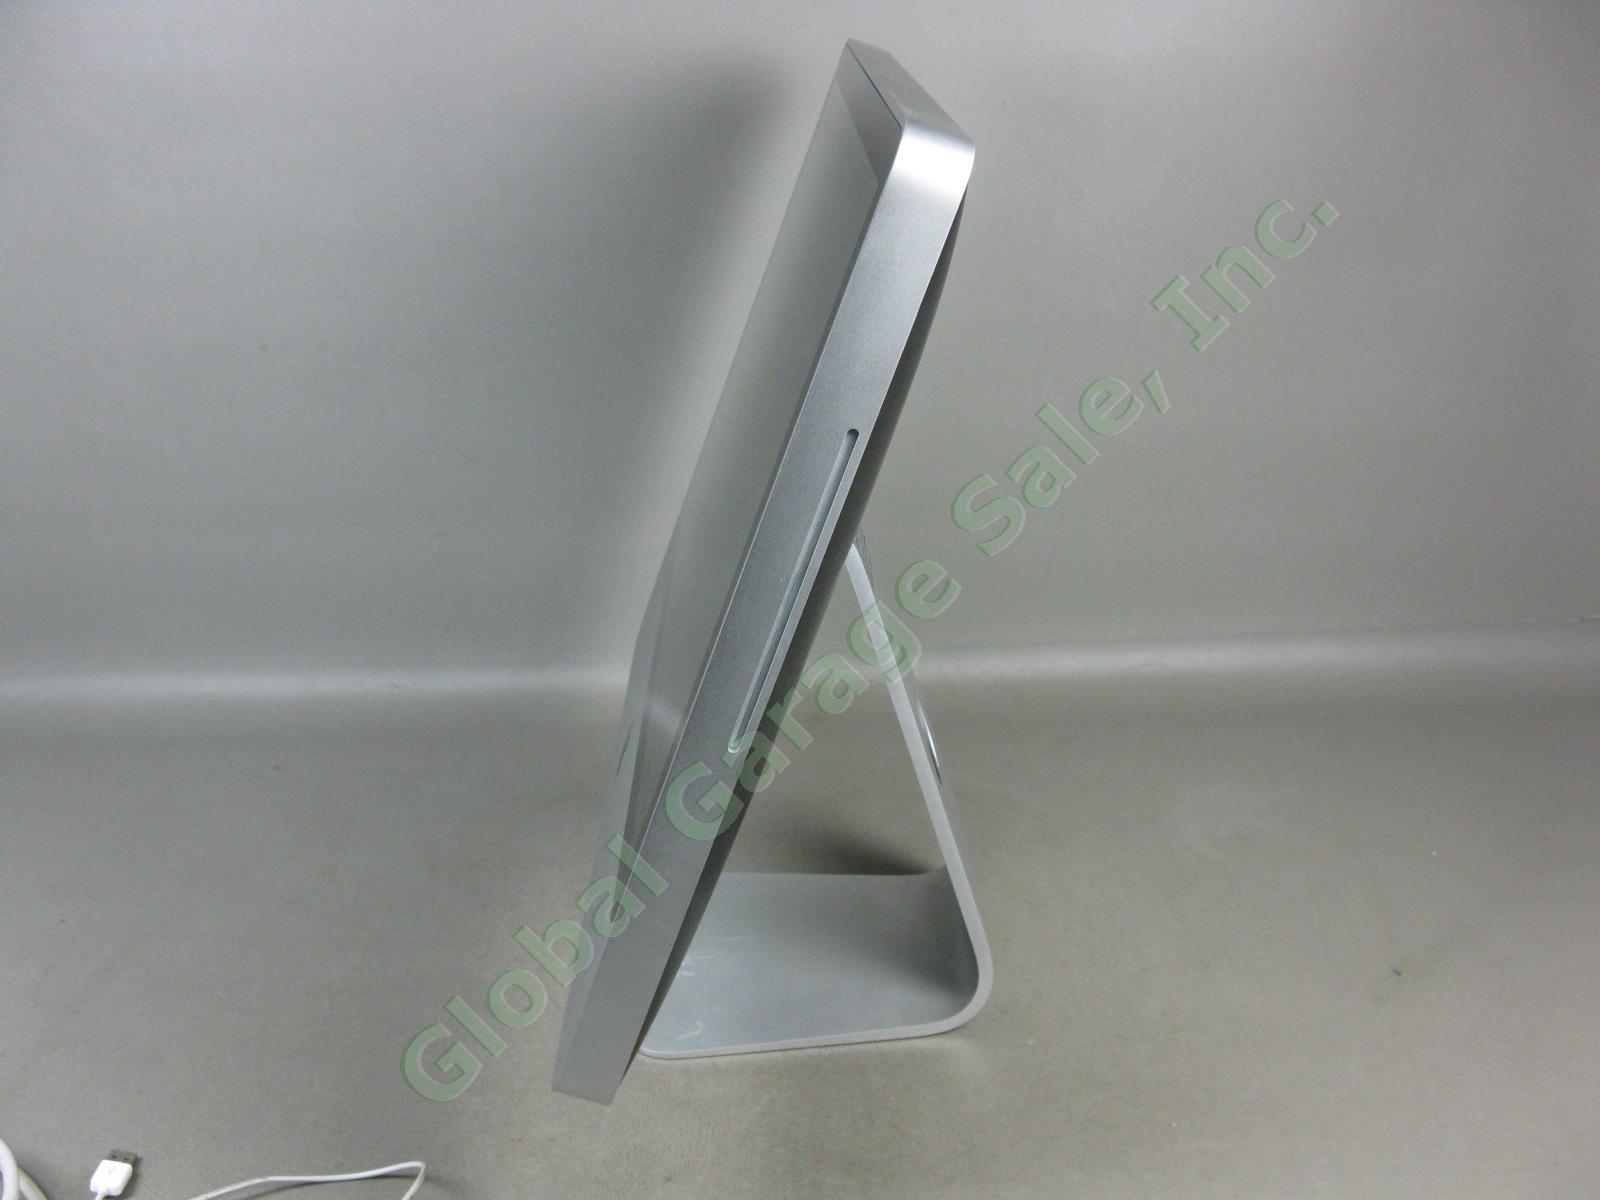 Apple iMac A1224 20" 2.26GHz Intel Core 2 Duo P7550 2GB RAM 160GB HDD MC015LL/B 2